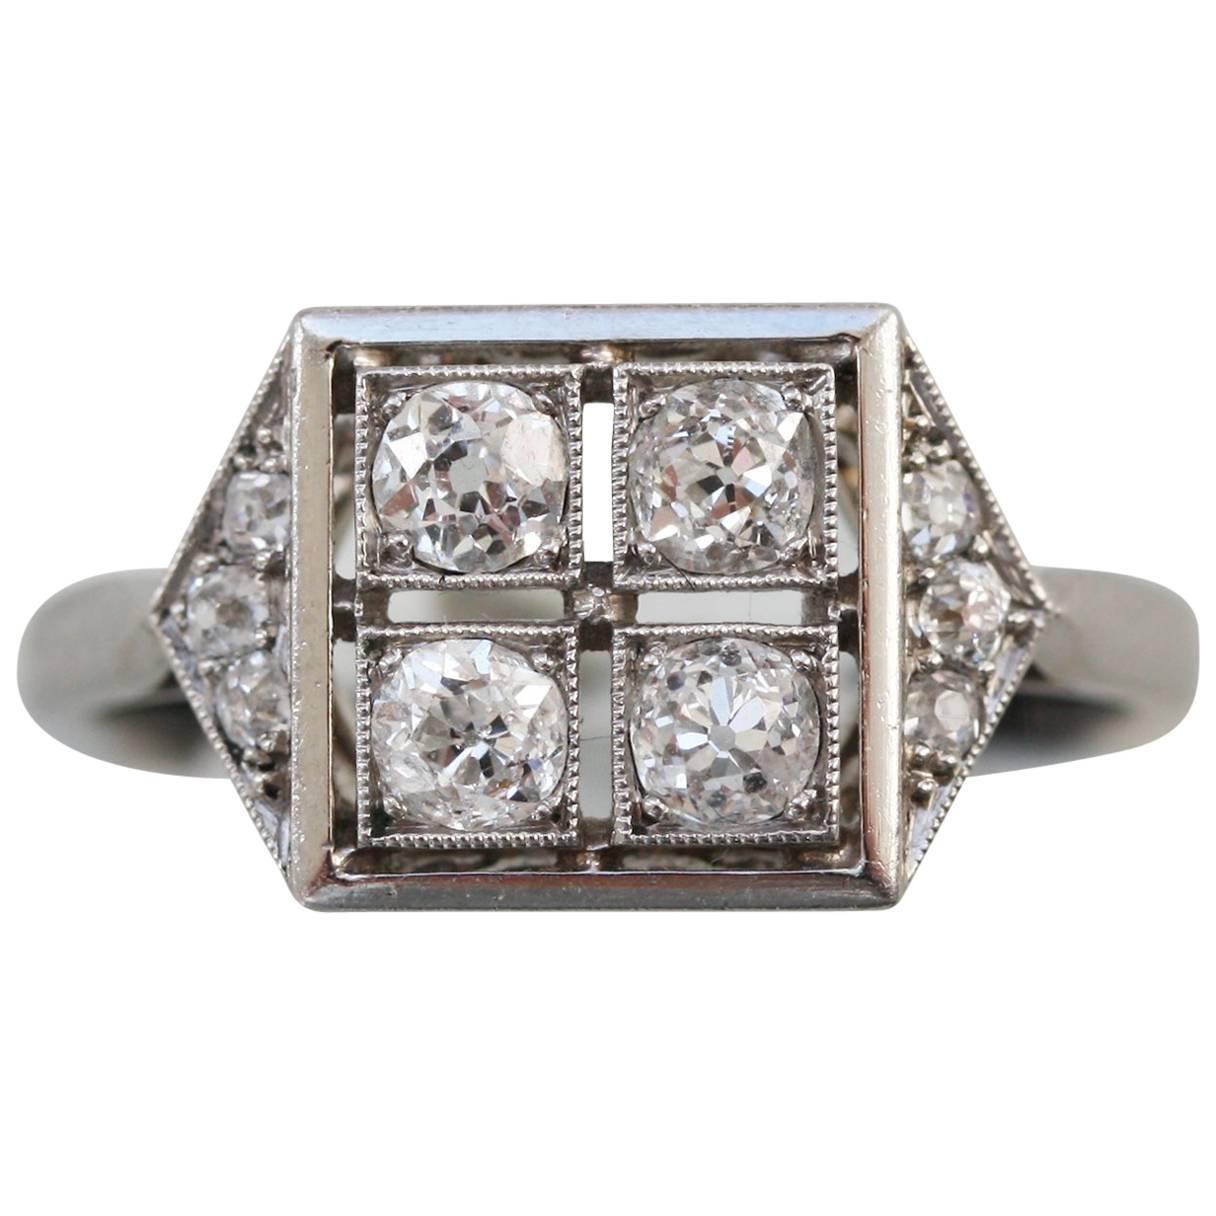 French Art Deco Platinum and Diamond Square Ring